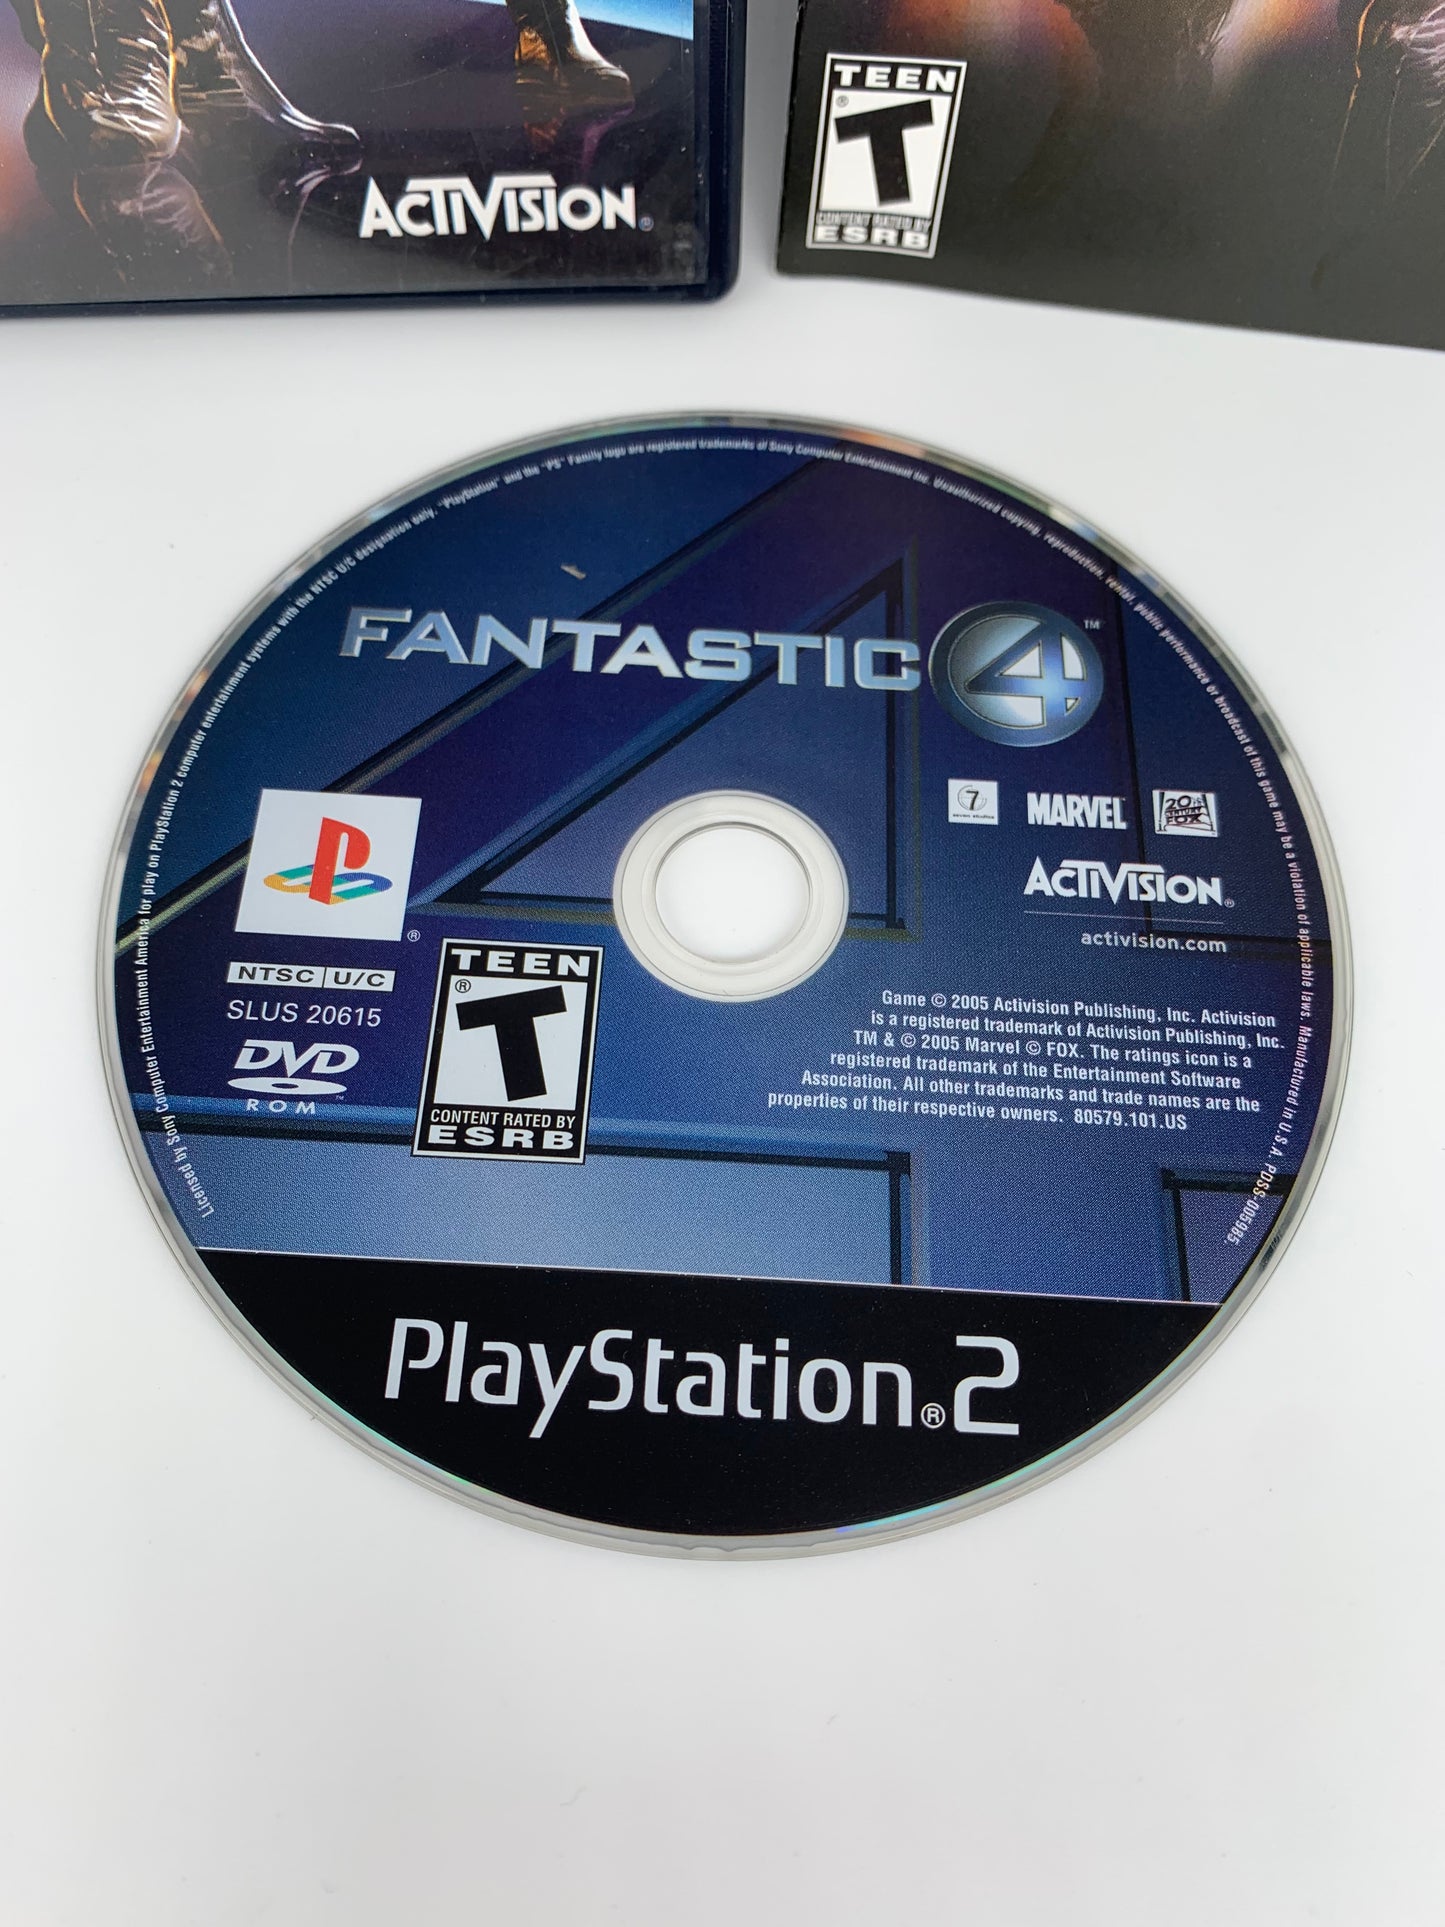 SONY PLAYSTATiON 2 [PS2] | FANTASTiC 4